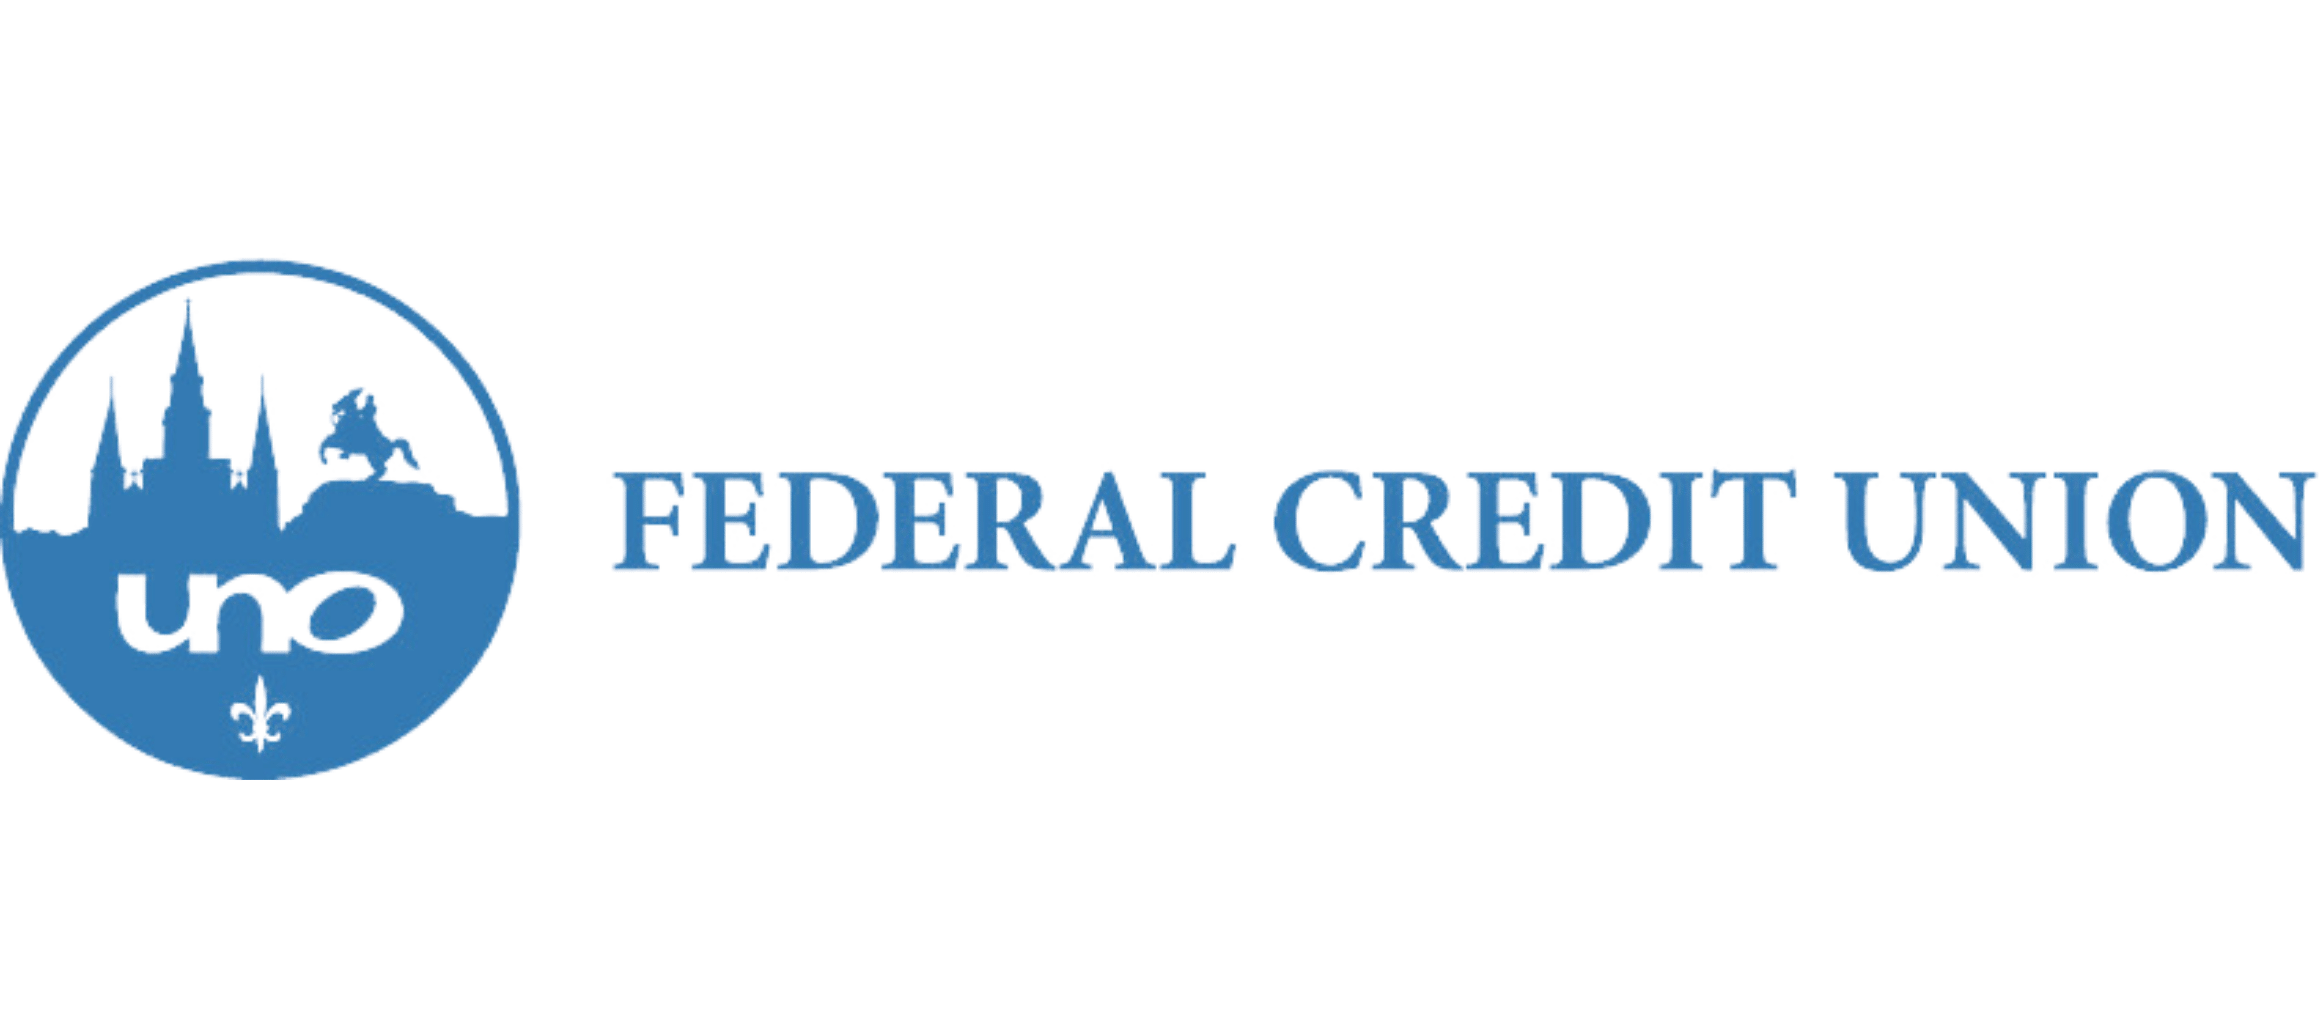 UNO Federal Credit Union